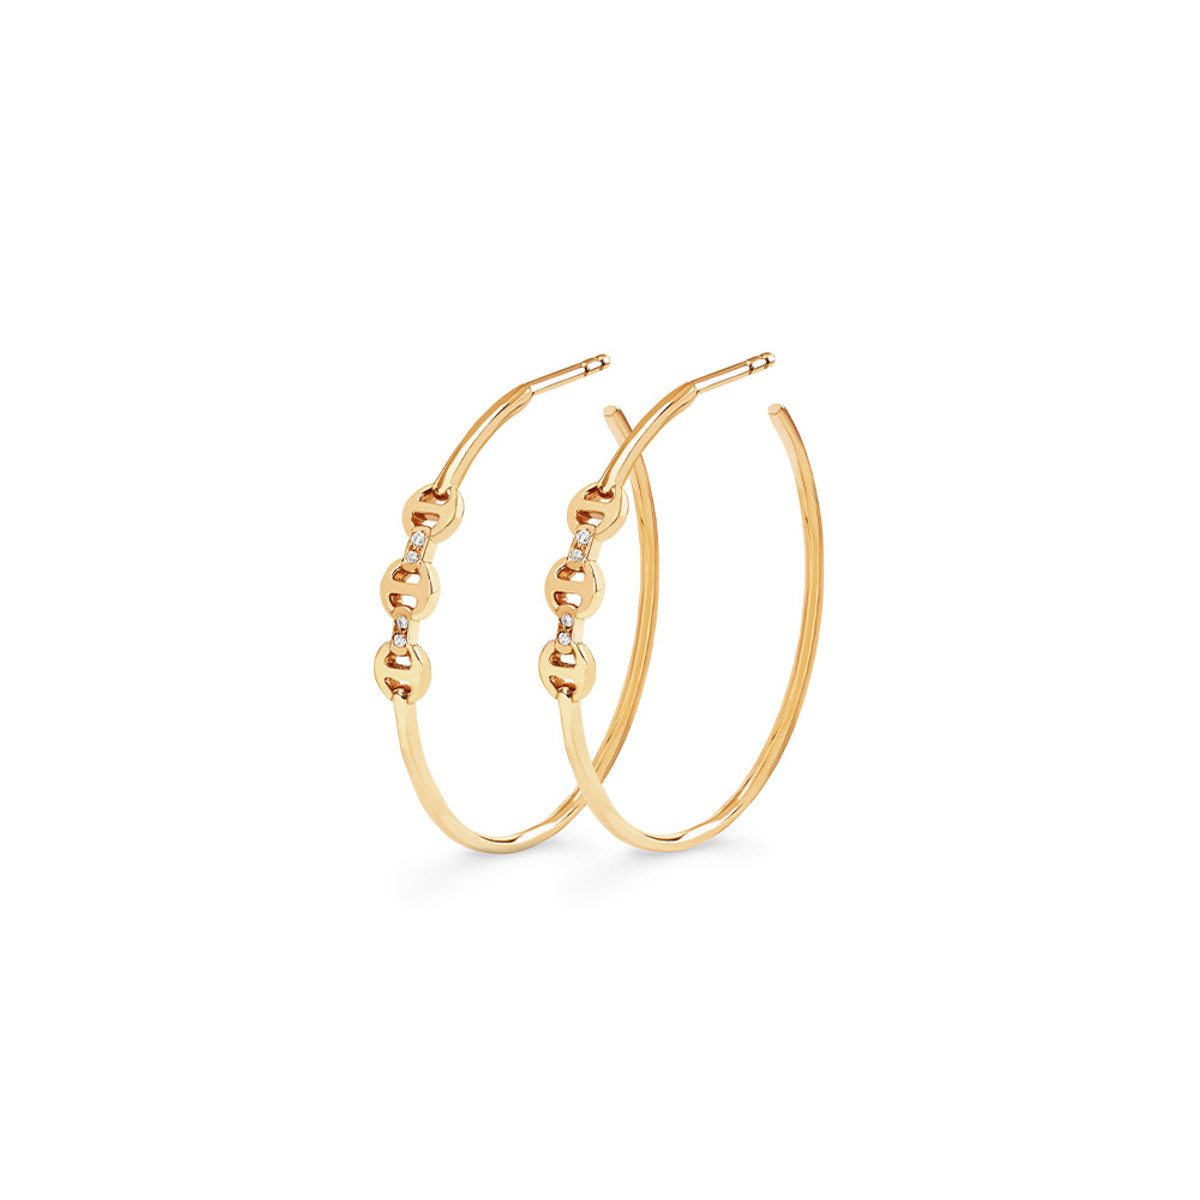 Hoorsenbuhs 18K Yellow Gold Hoops Earrings with Mini Diamond Bridges-57473